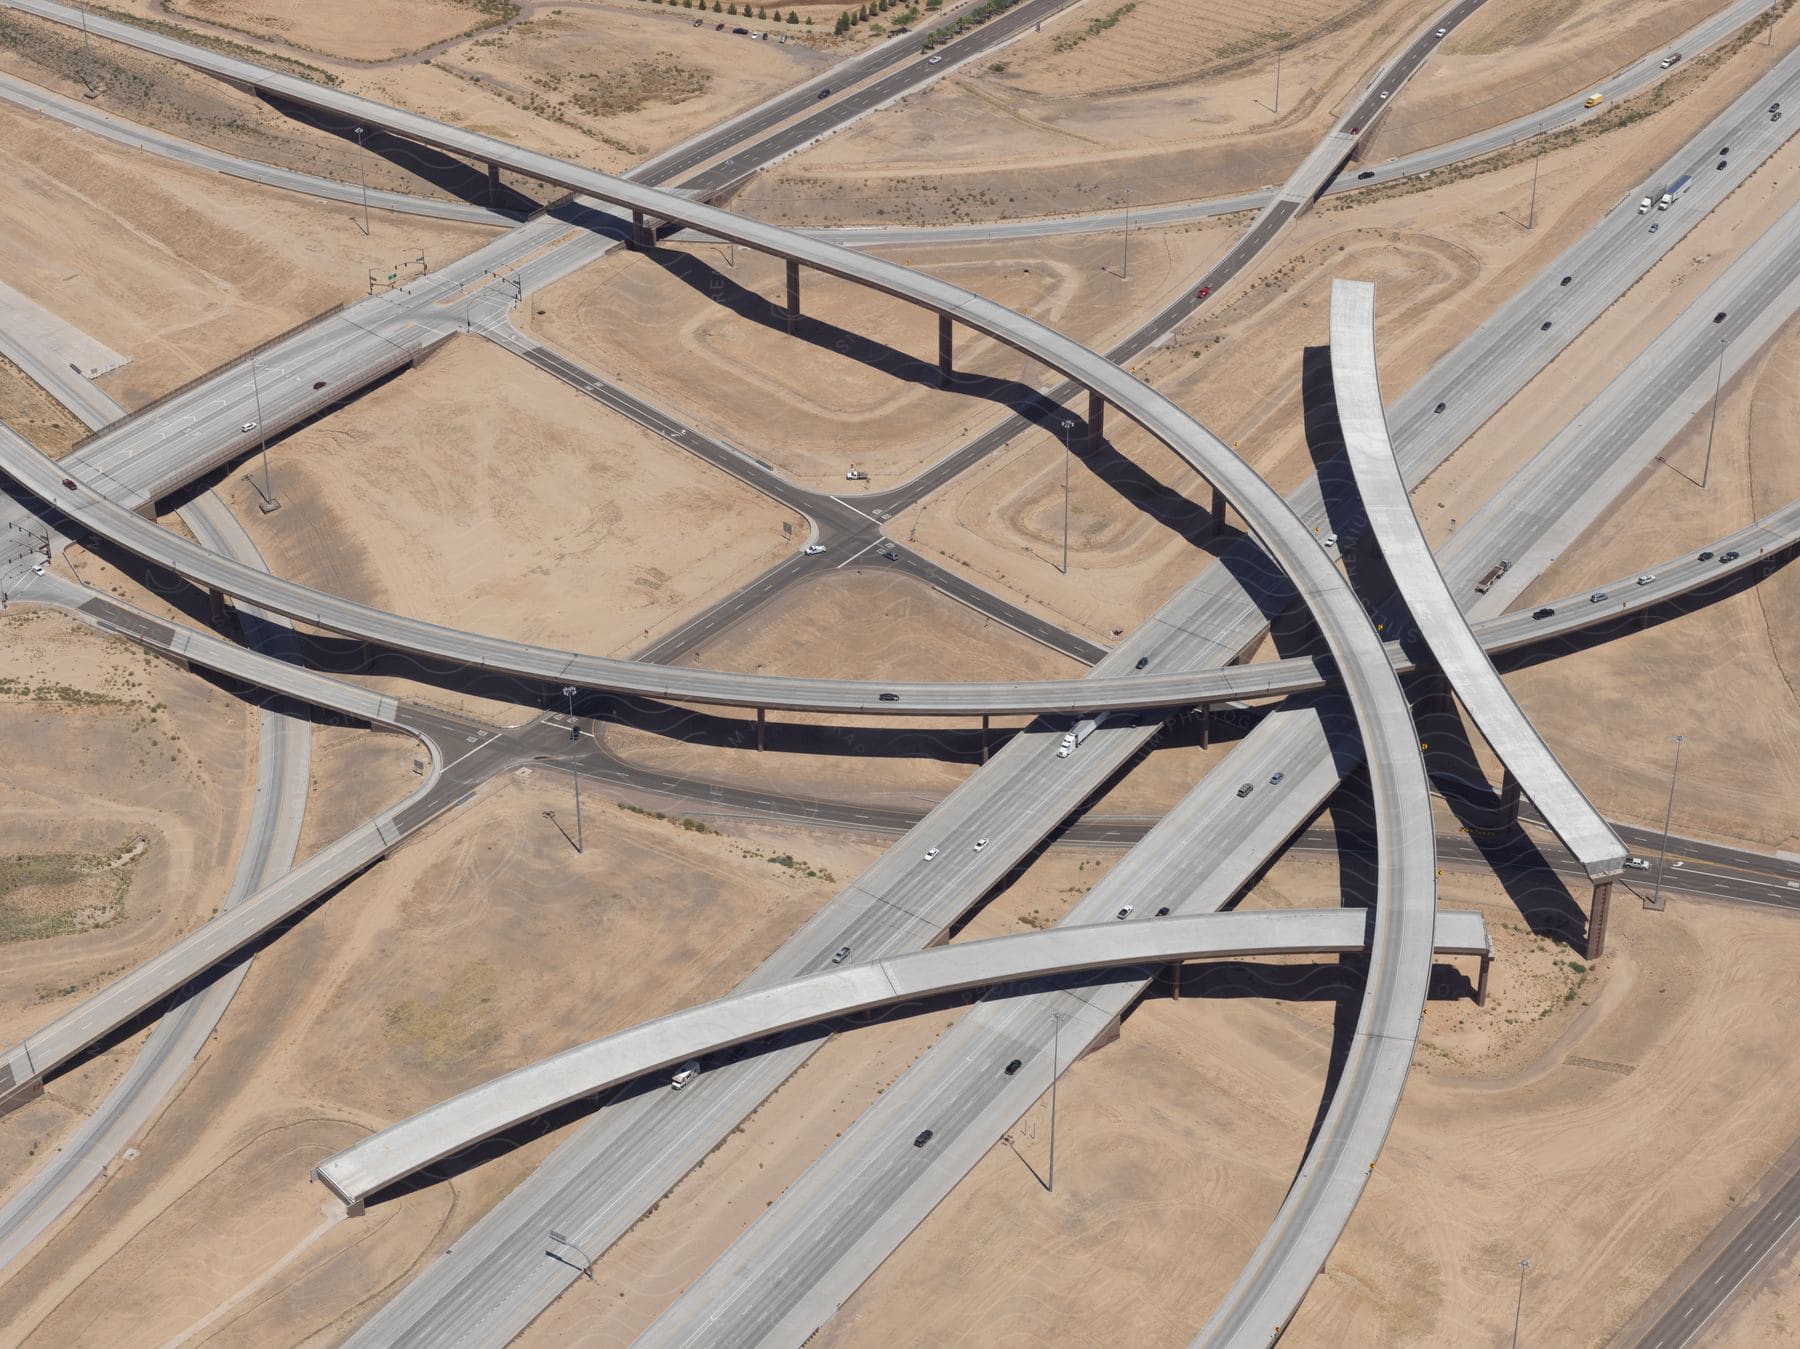 Aerial view of highway bridges and loops in a desert